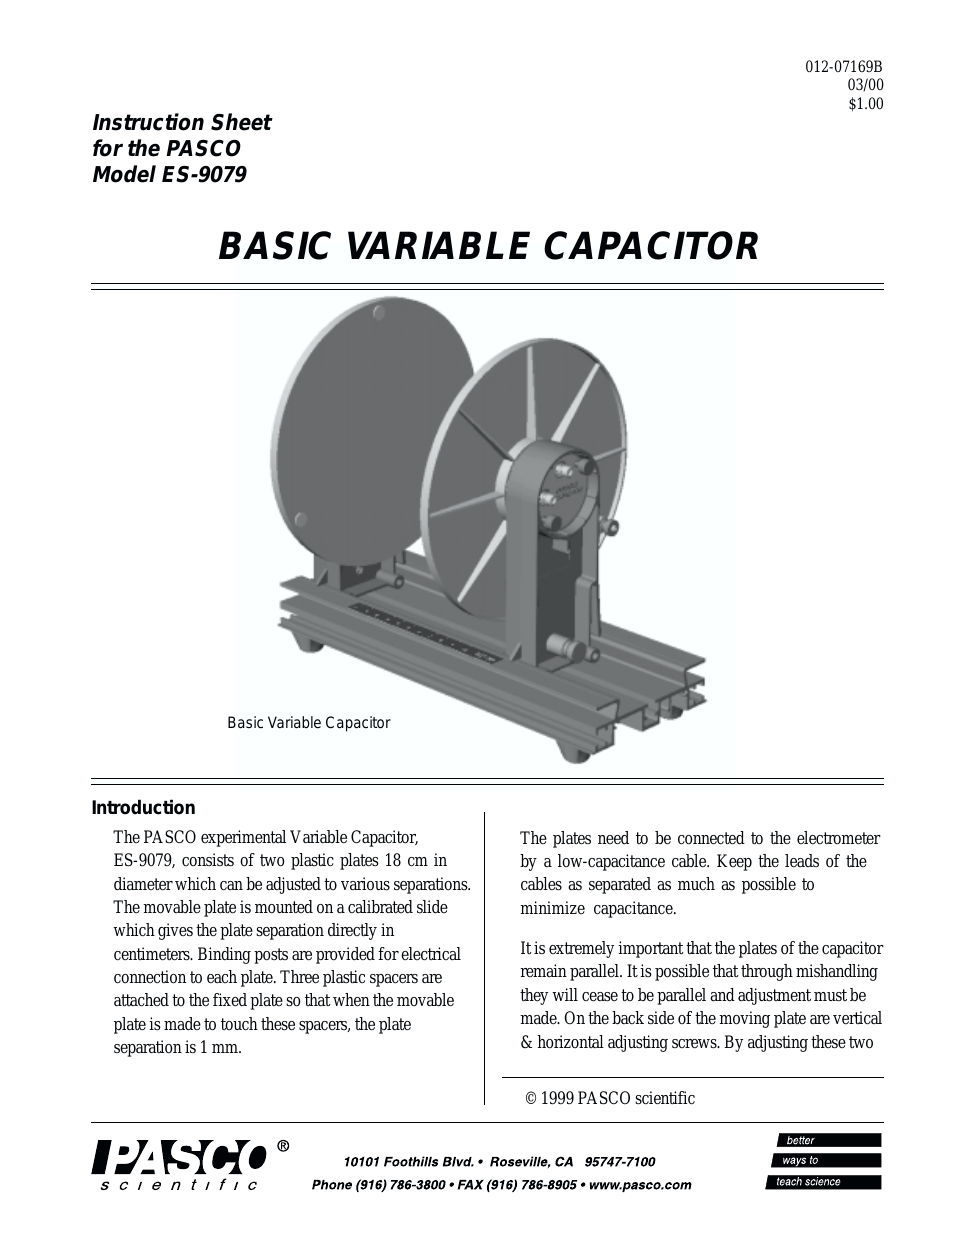 ES-9079 BASIC VARIABLE CAPACITOR